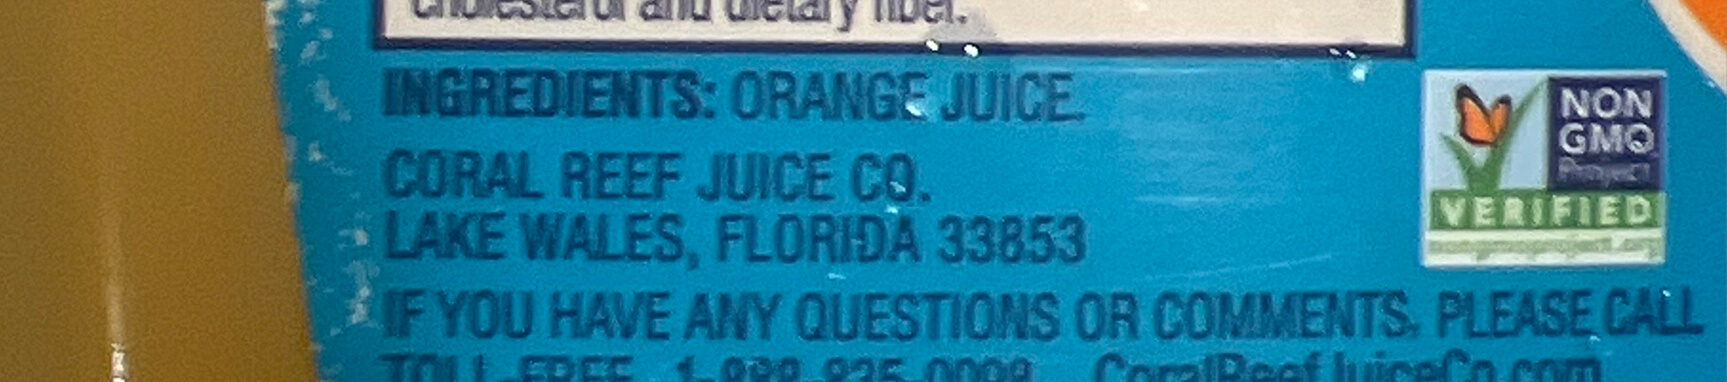 Orange juice - Ingredients